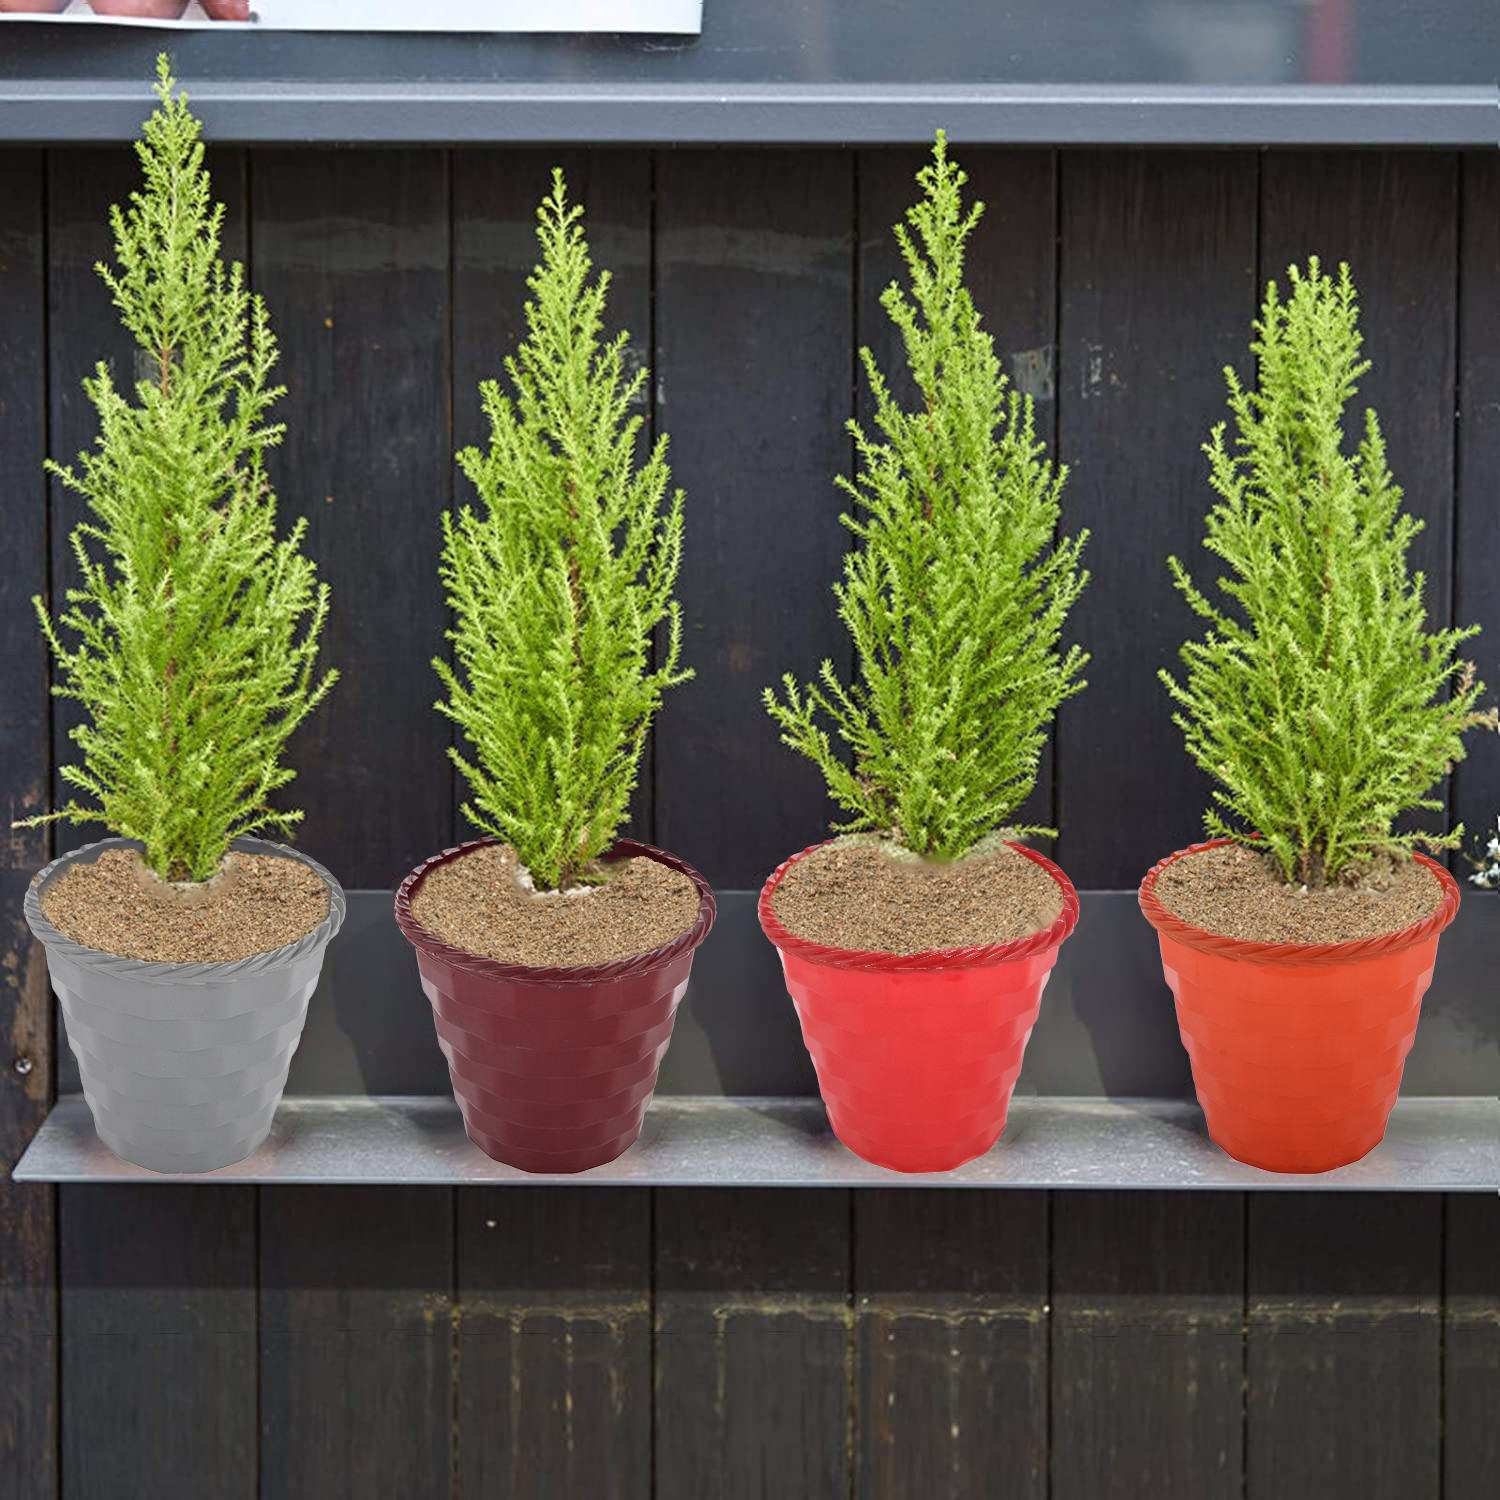 Kuber Industries Brick Flower Pot|Durable Plastic Flower Pots|Planters for Home Décor|Garden|Living Room|Balcony|6 Inch|(Grey)